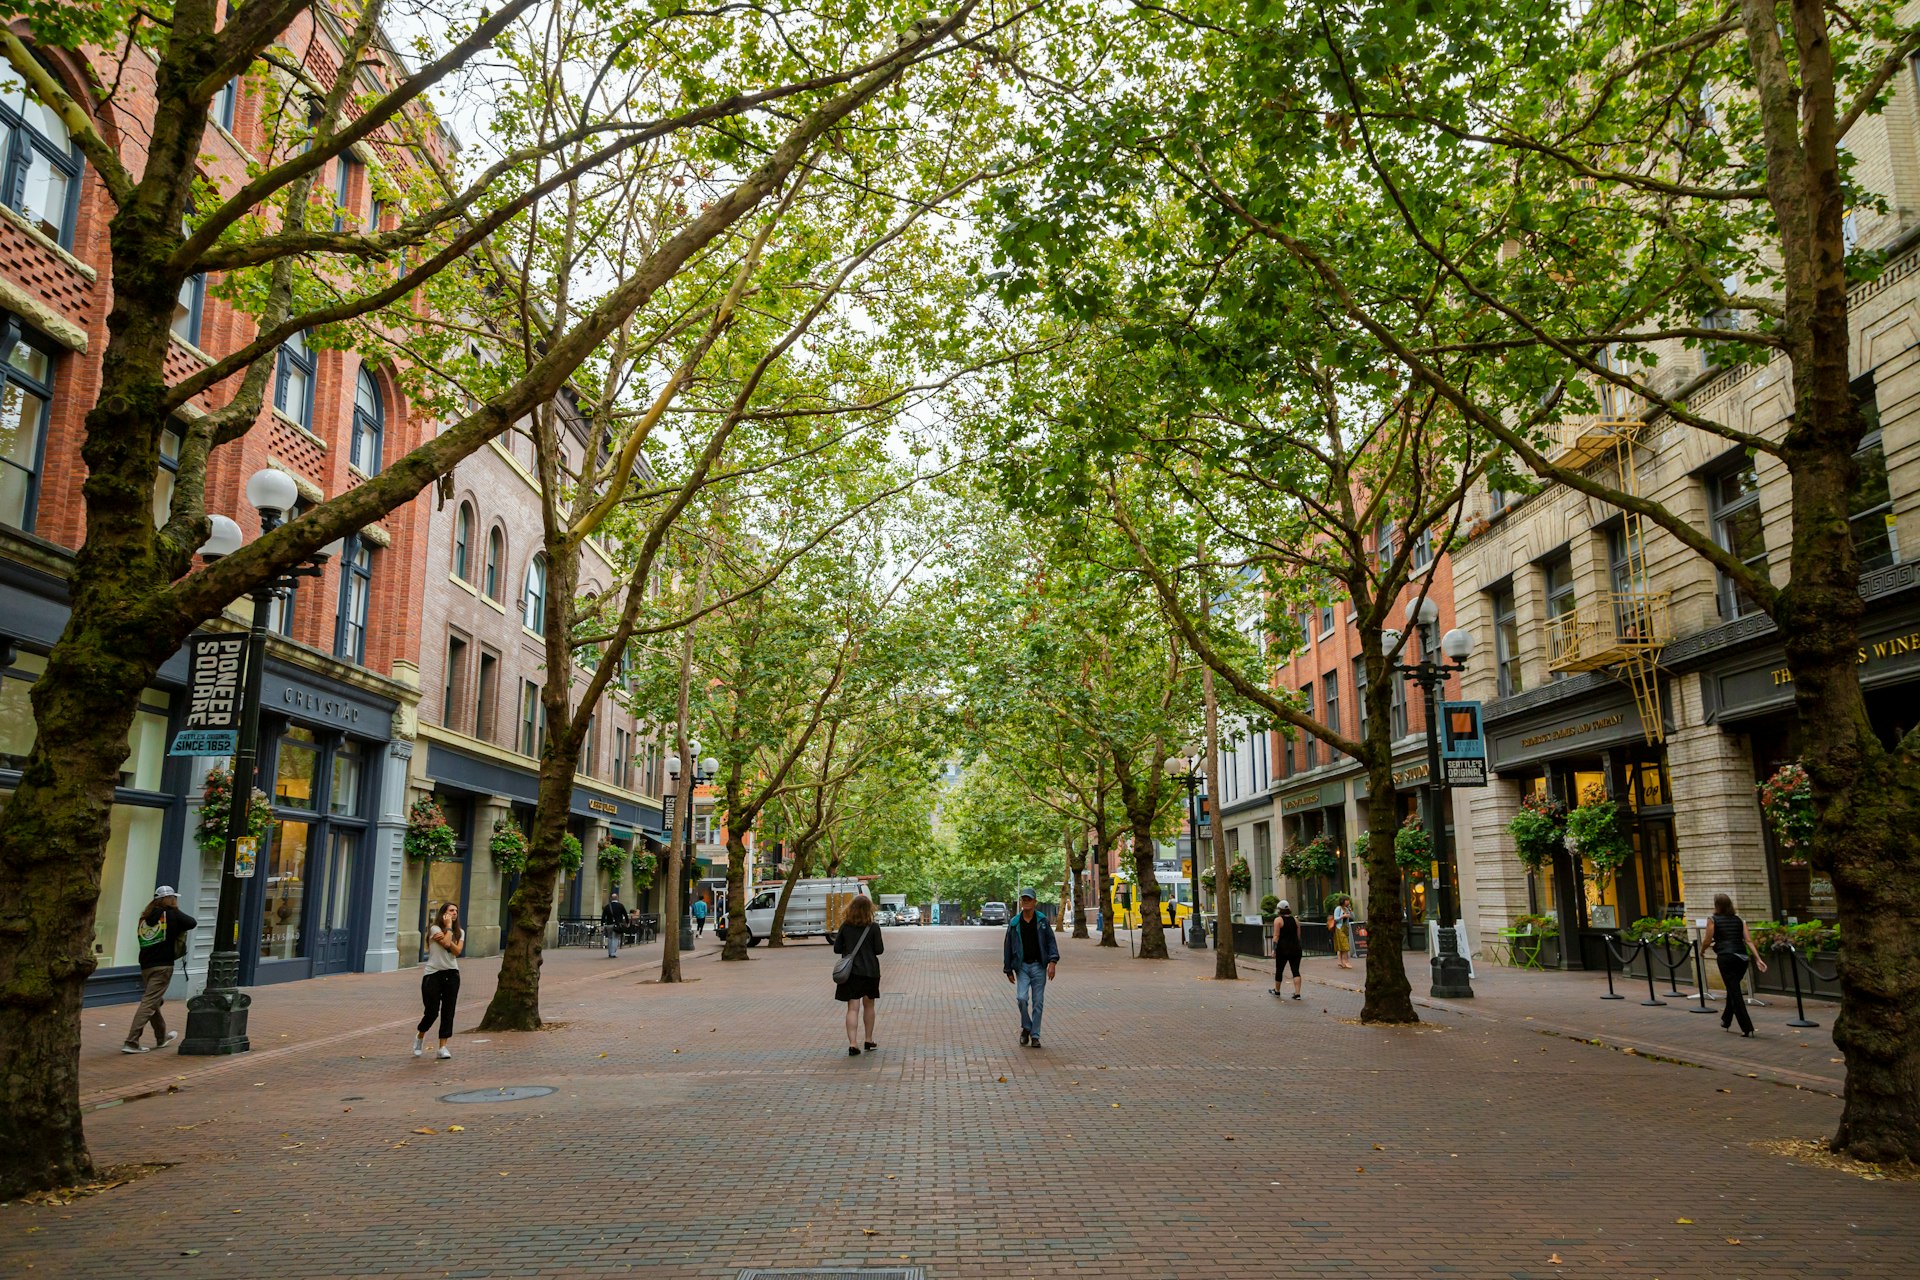 People walk on a tree-lined street on the historic brick Occidental Walk Avenue in the Pioneer Square neighborhood of Seattle, Washington